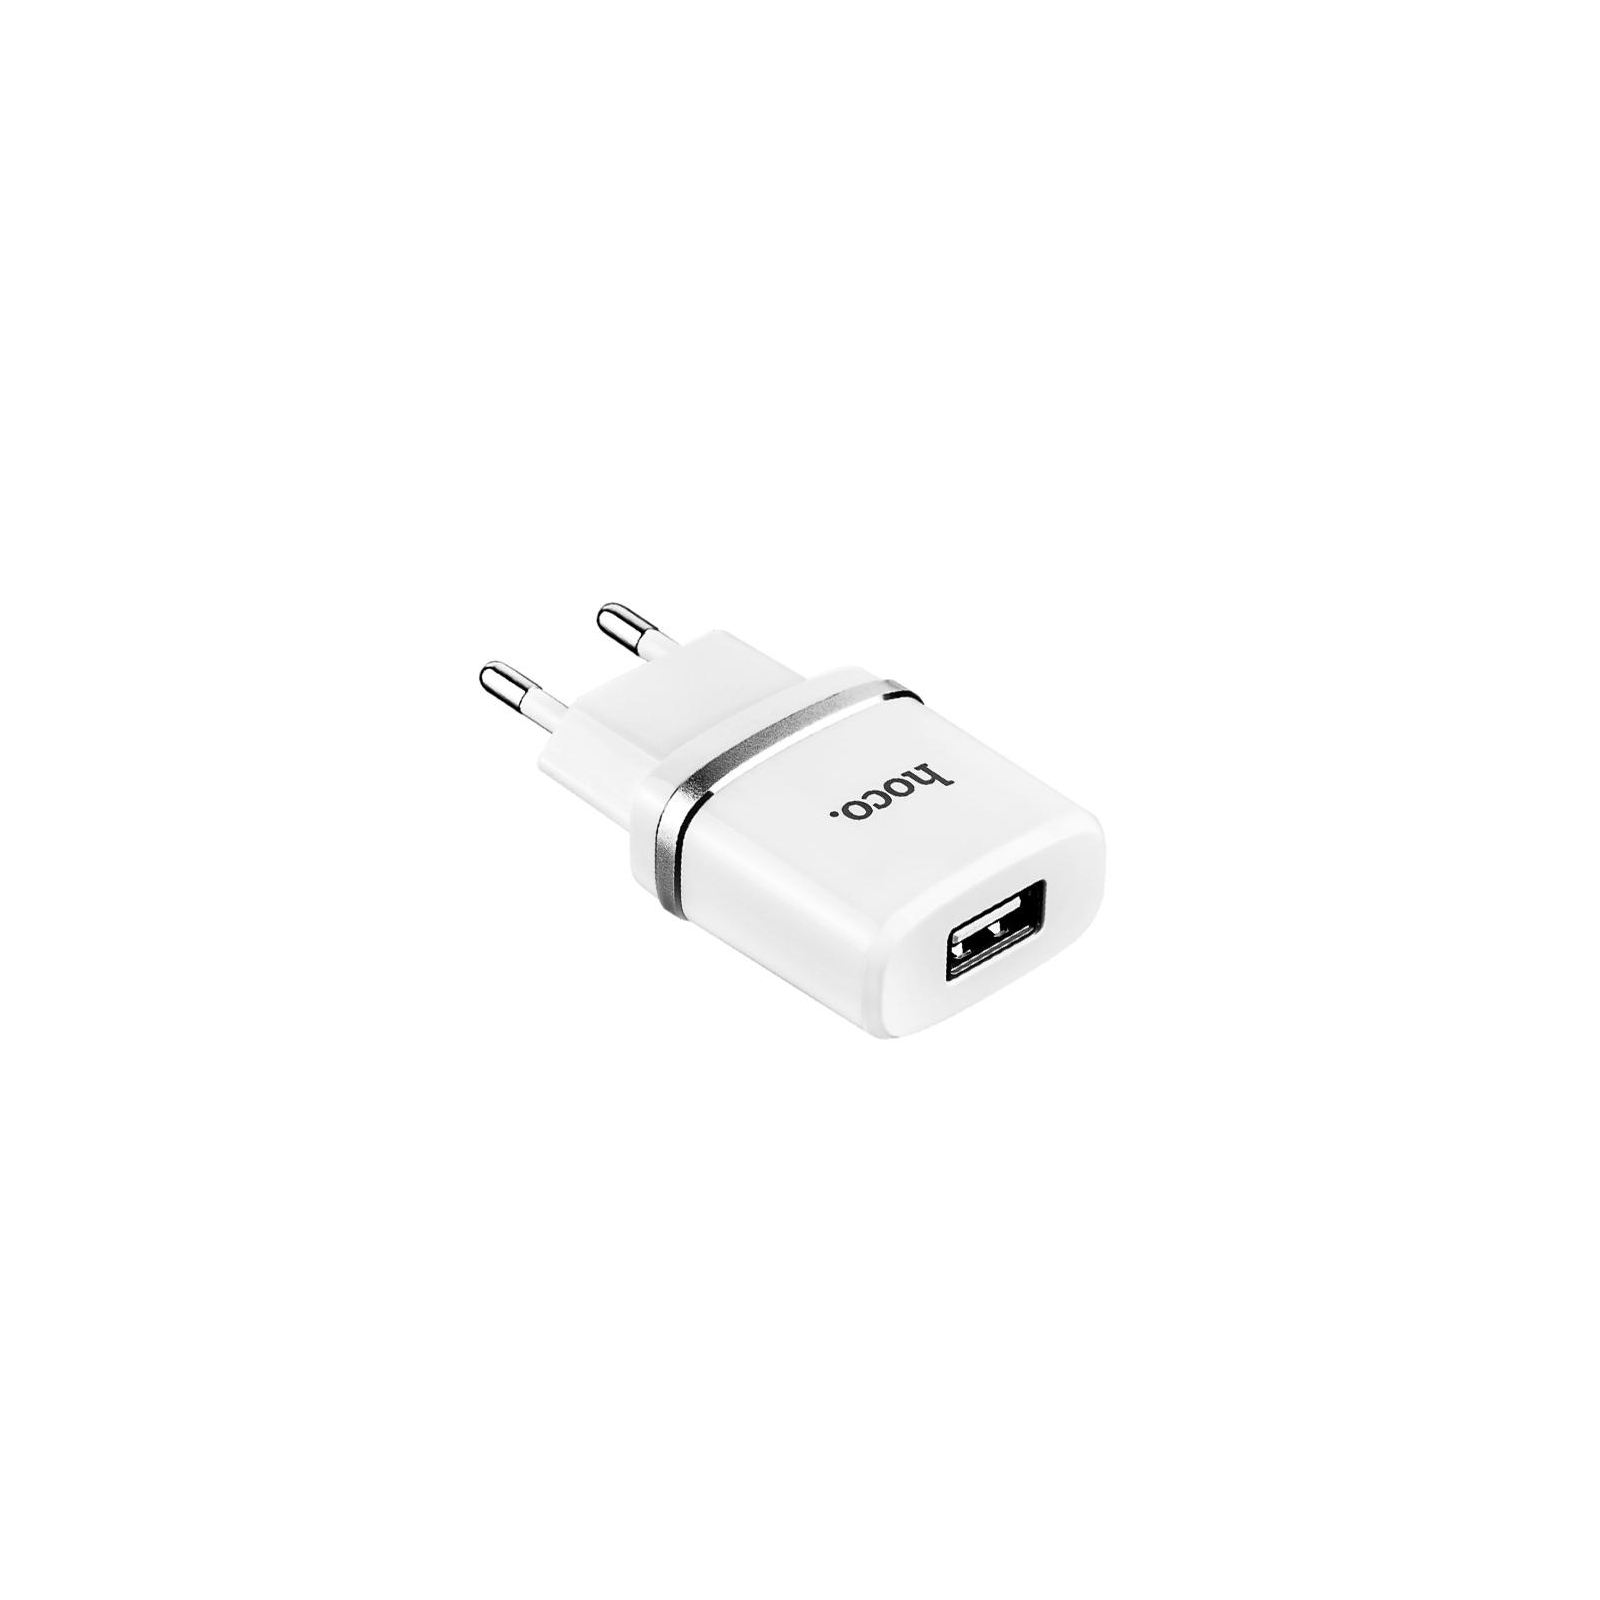 Зарядное устройство HOCO C11 1*USB, 1A, White + USB Cable MicroUSB (63320) изображение 3